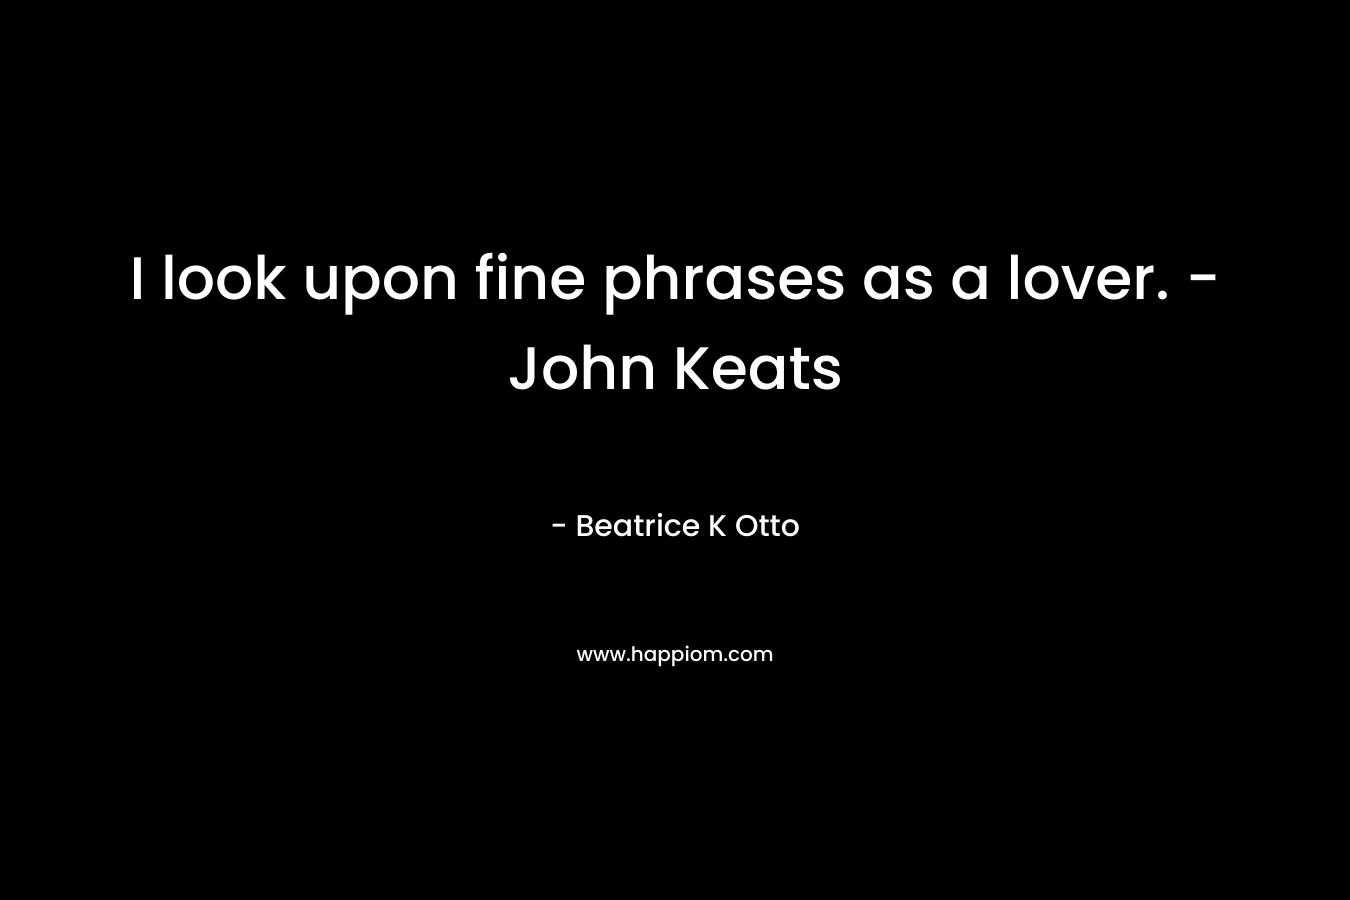 I look upon fine phrases as a lover. - John Keats